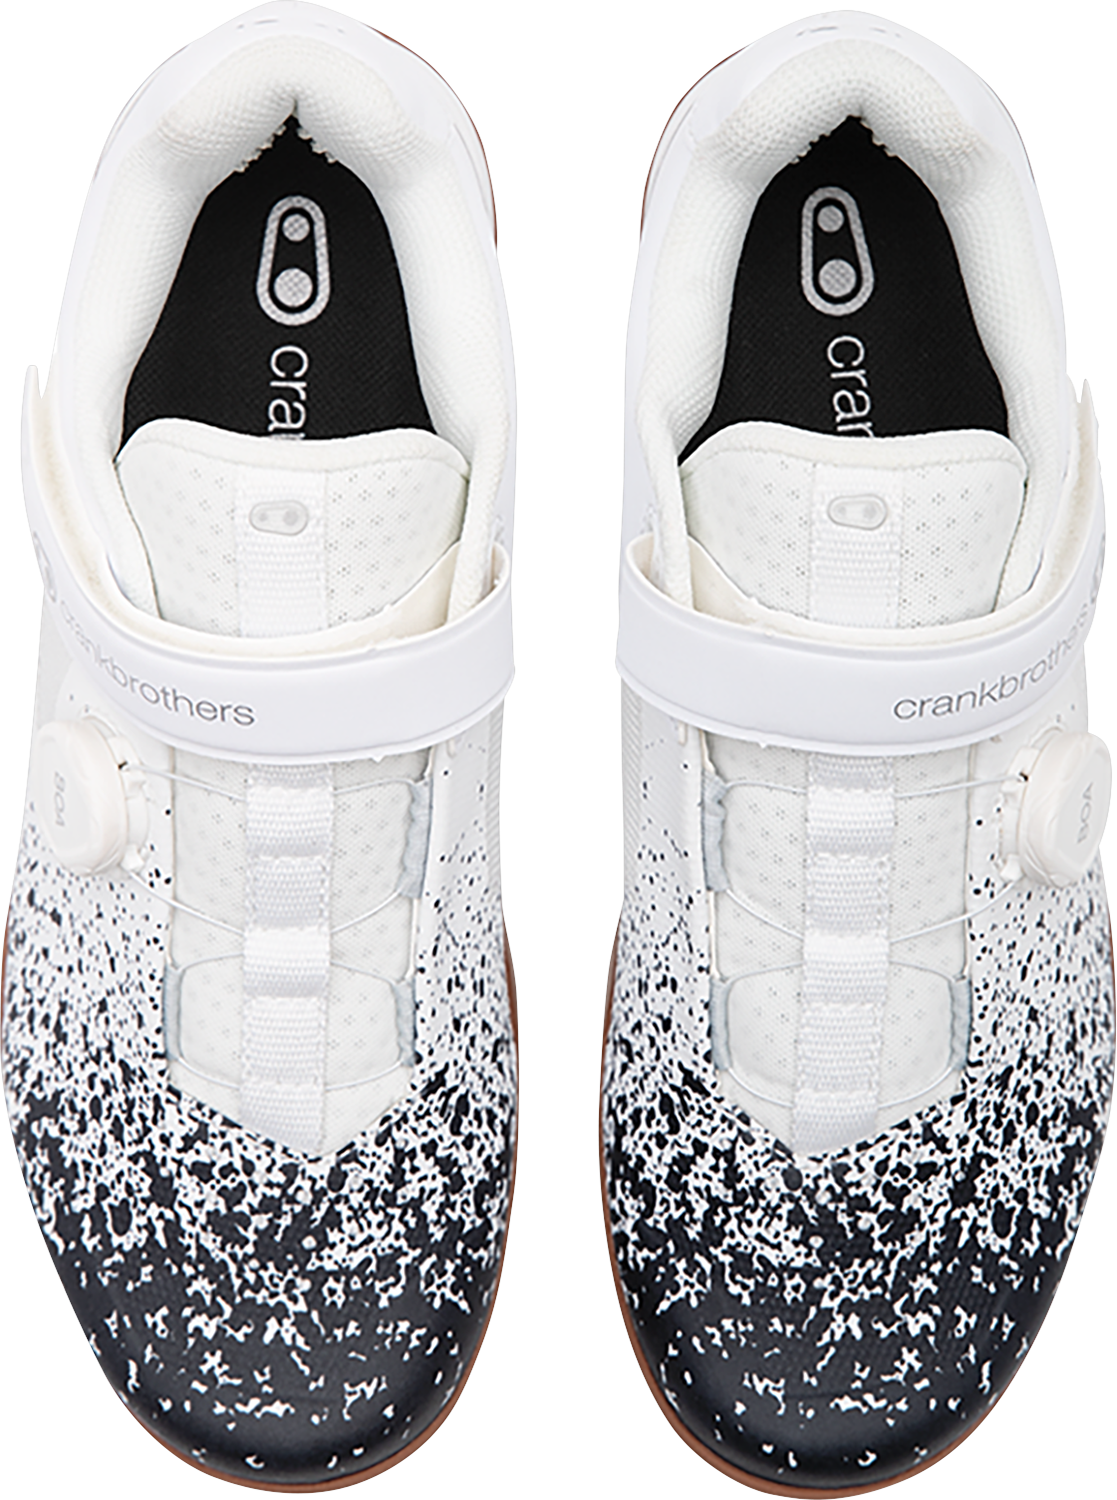 Mallet E BOA® Shoes - Black/White - US 9.5